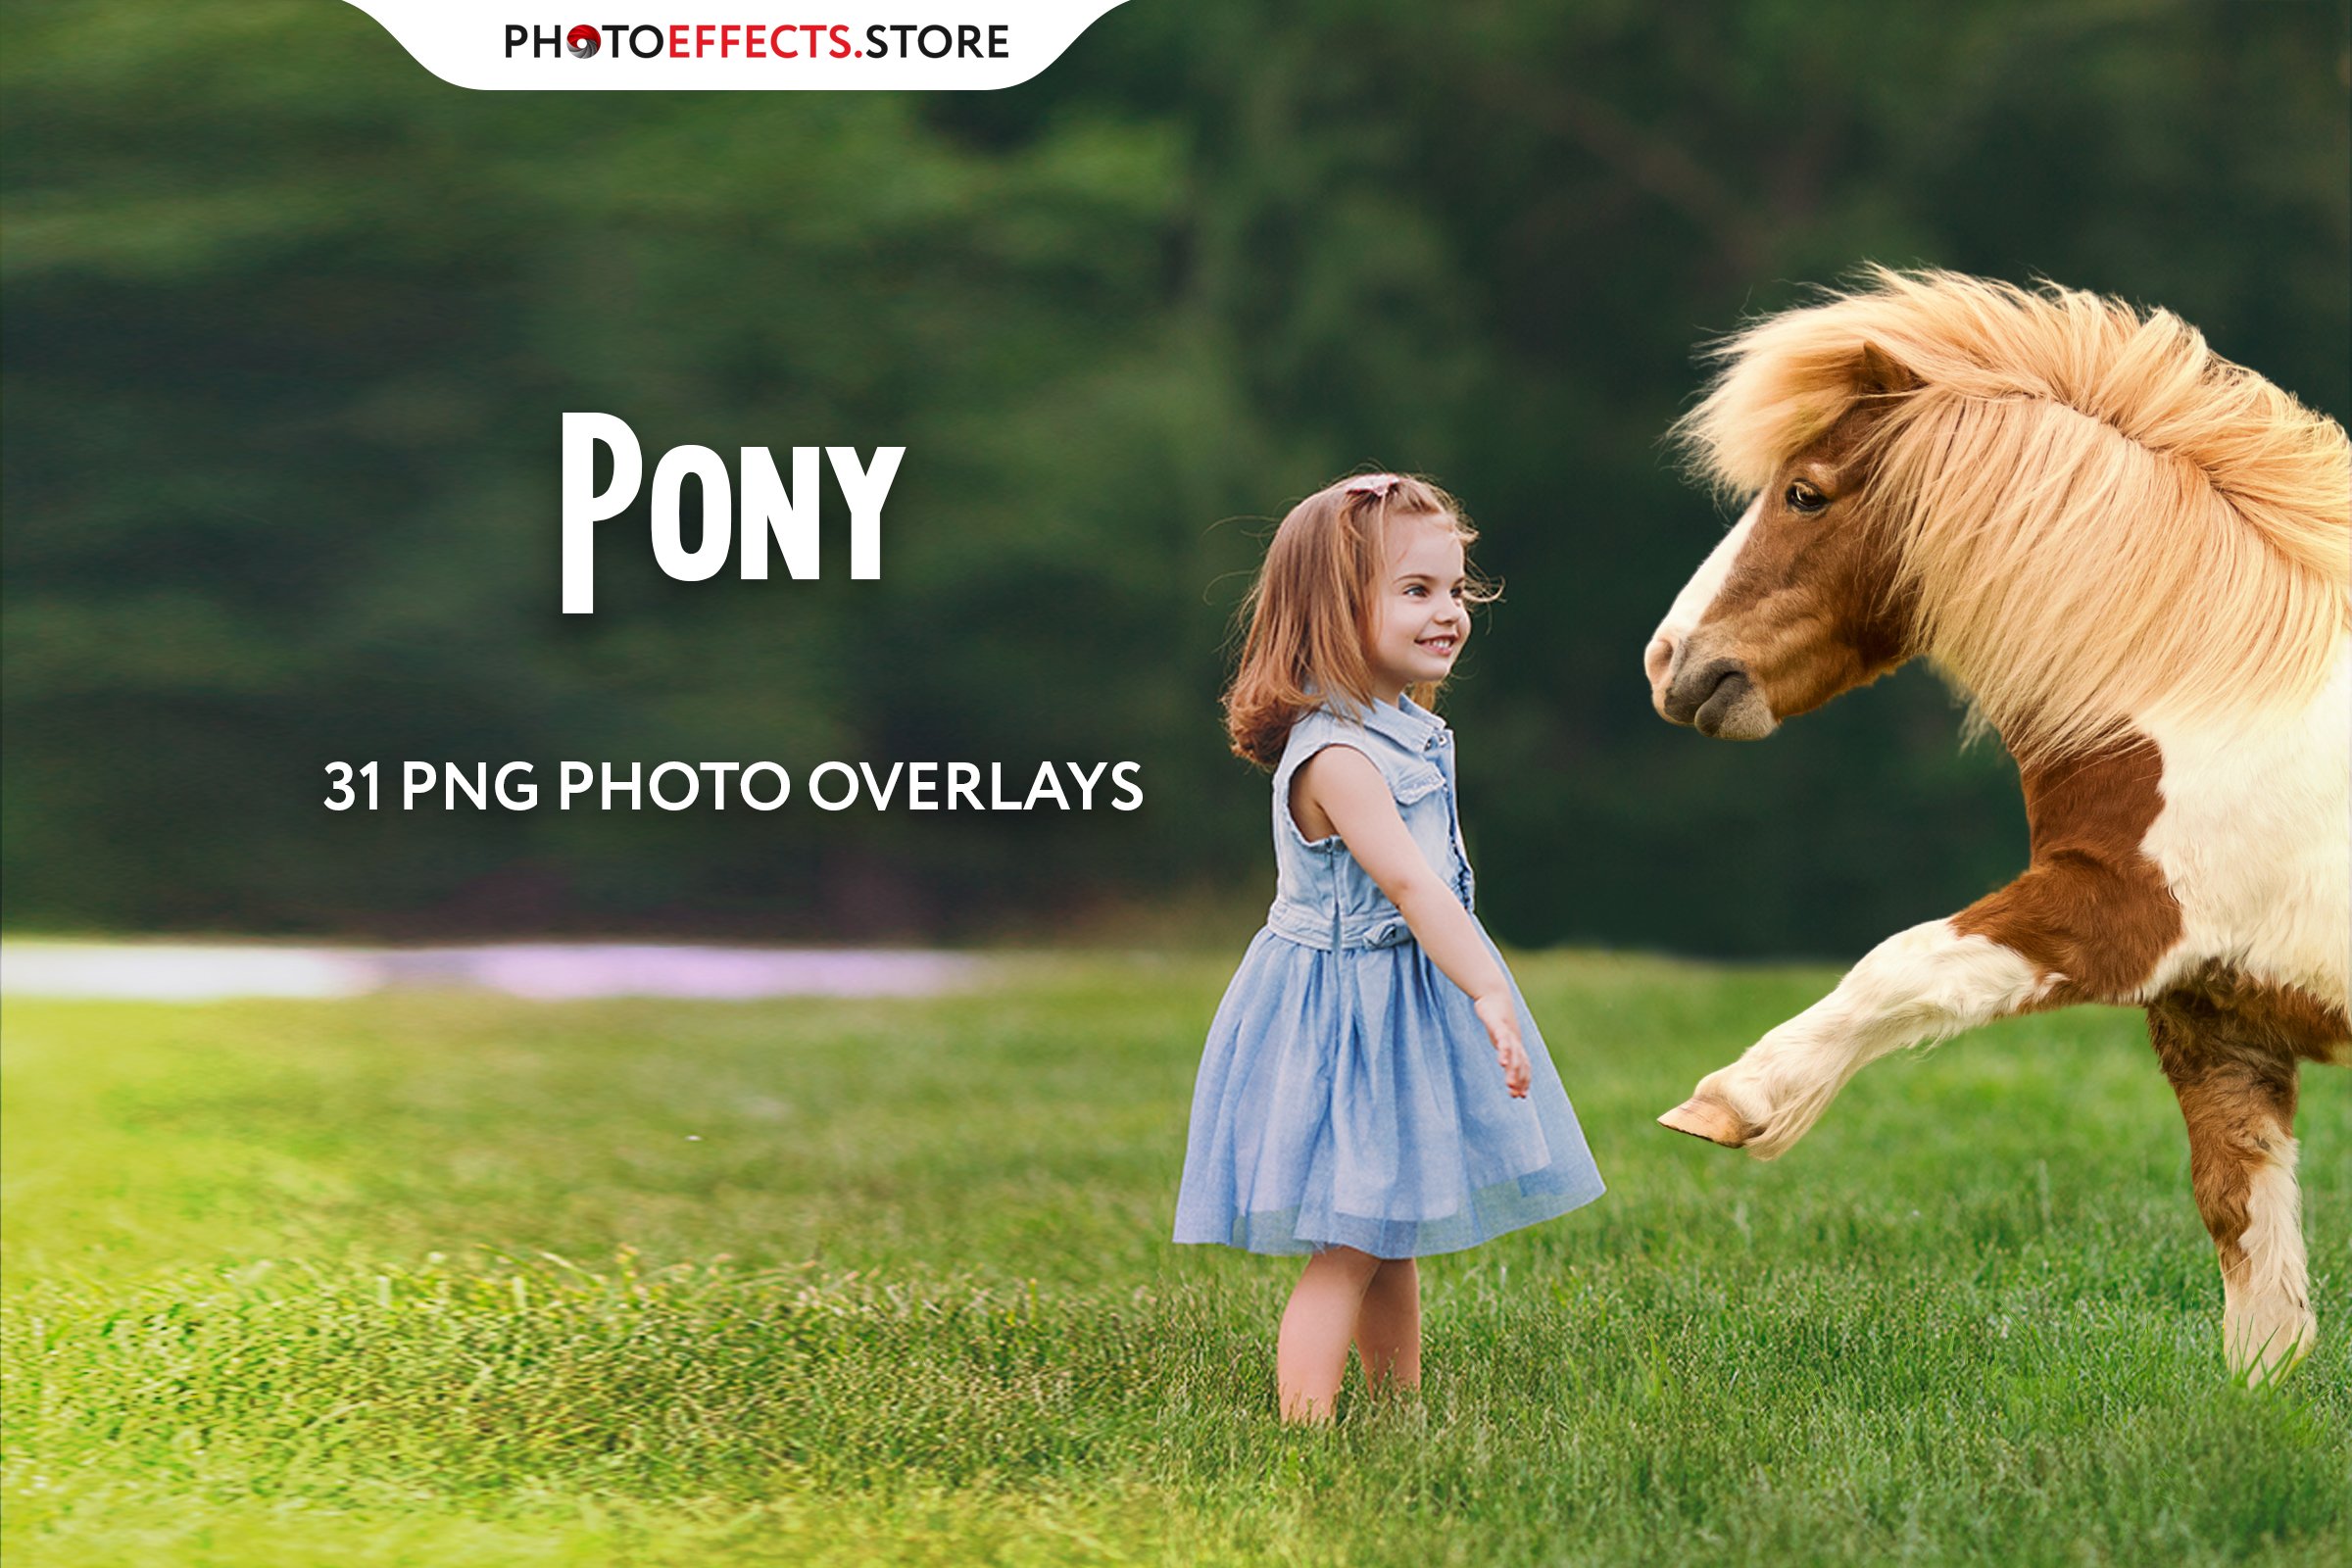 31 Pony Photo Overlayscover image.